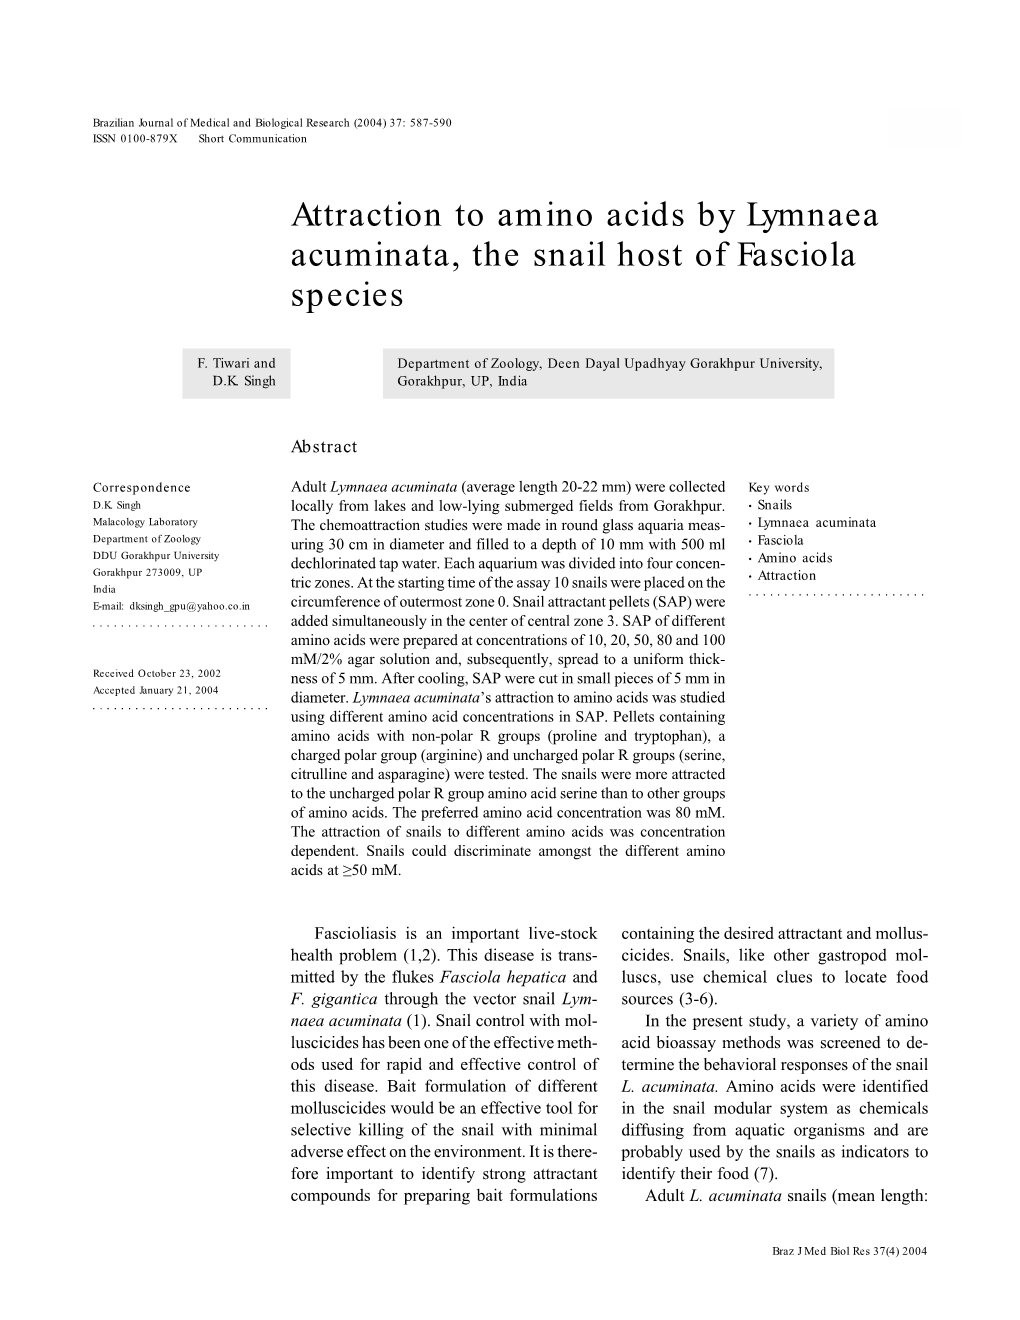 Attraction to Amino Acids by Lymnaea Acuminata, the Snail Host of Fasciola Species